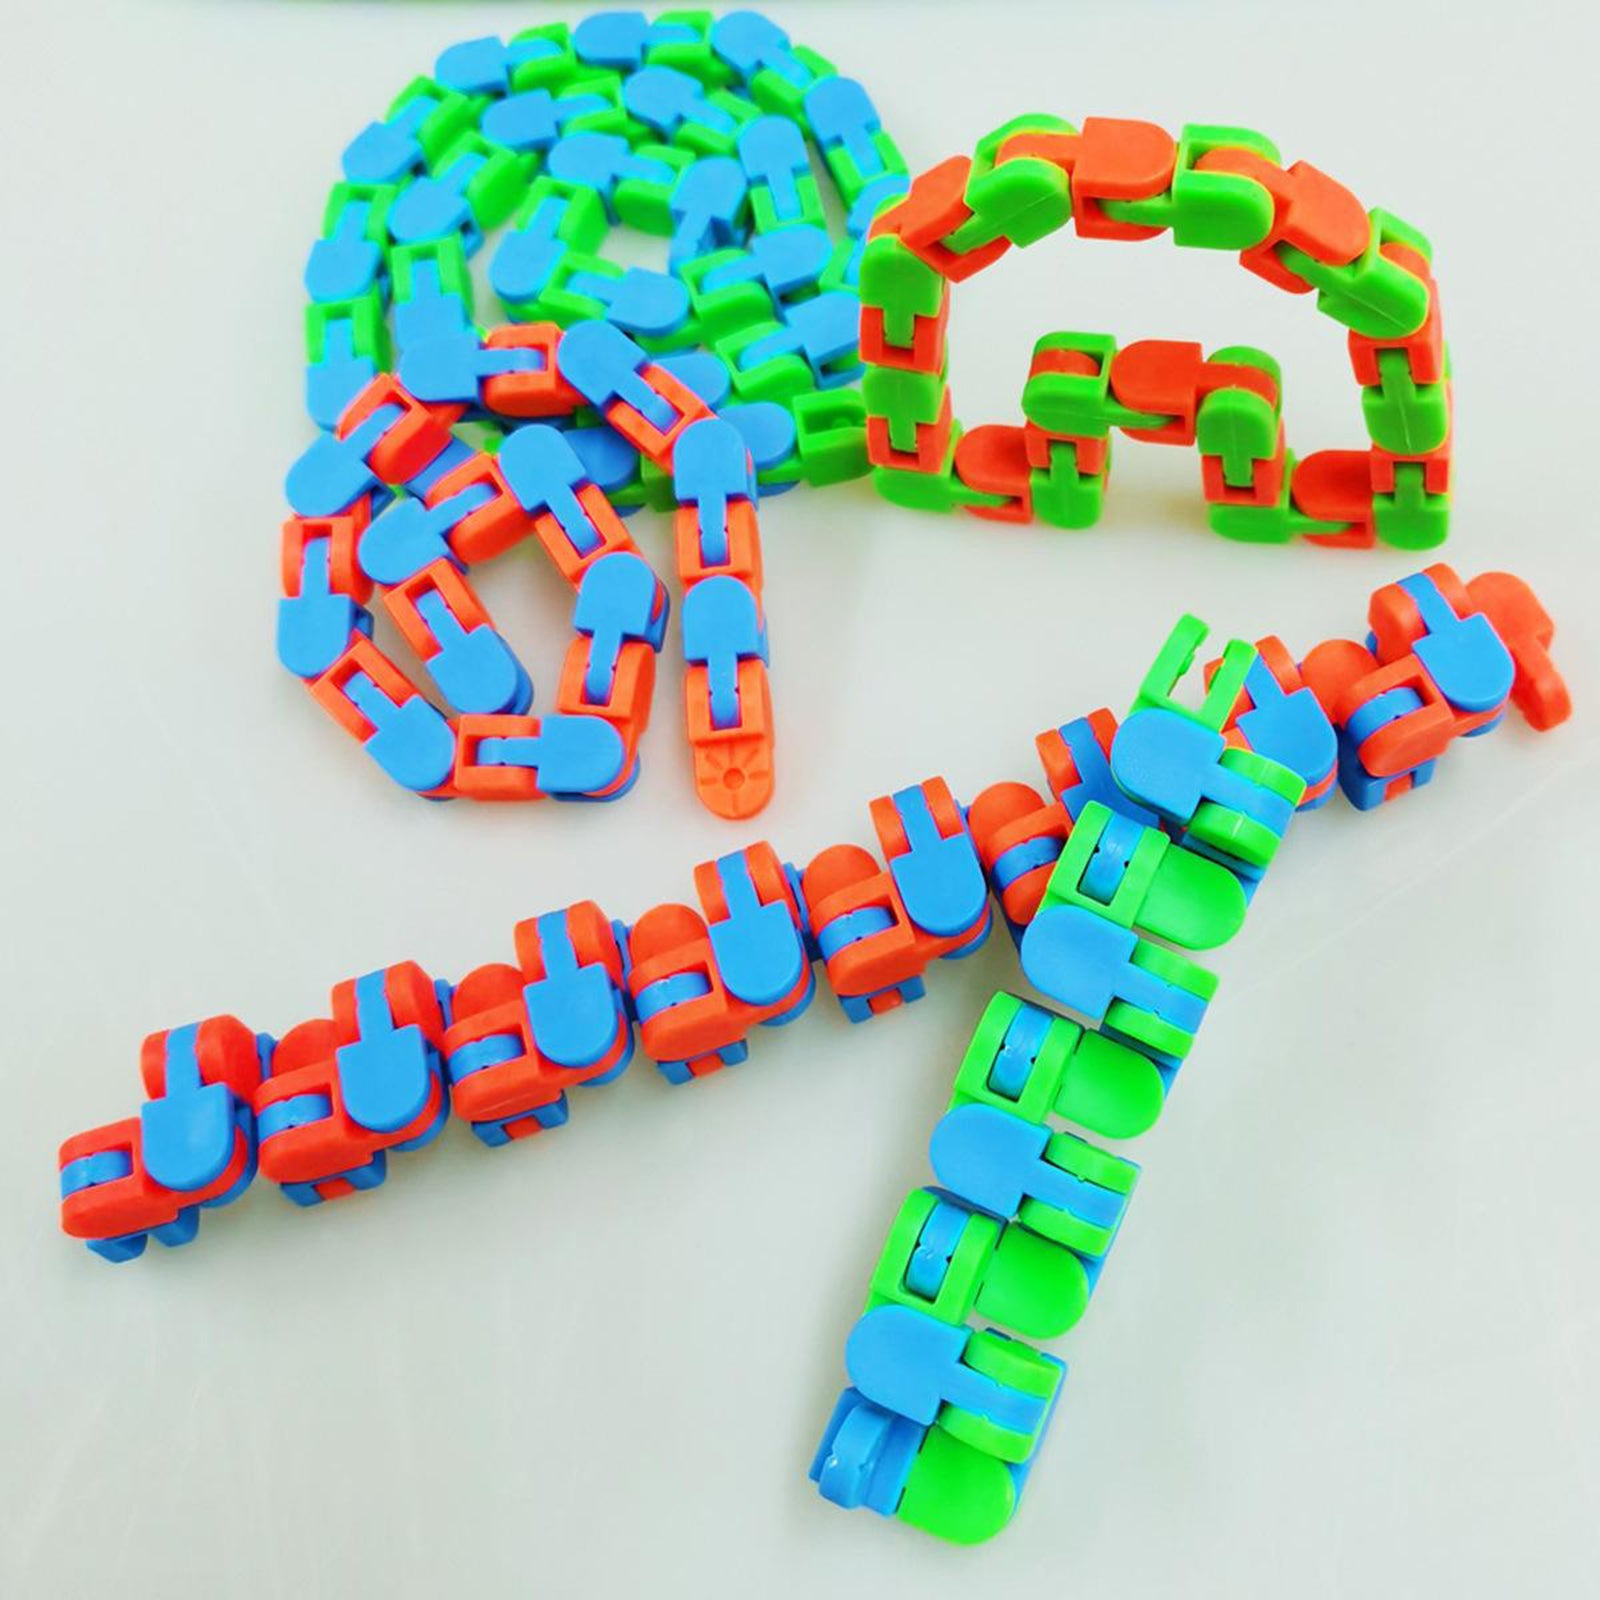 Wacky Tracks Snap and Click Sensory Toys Kids Adult Puzzles Orange Green